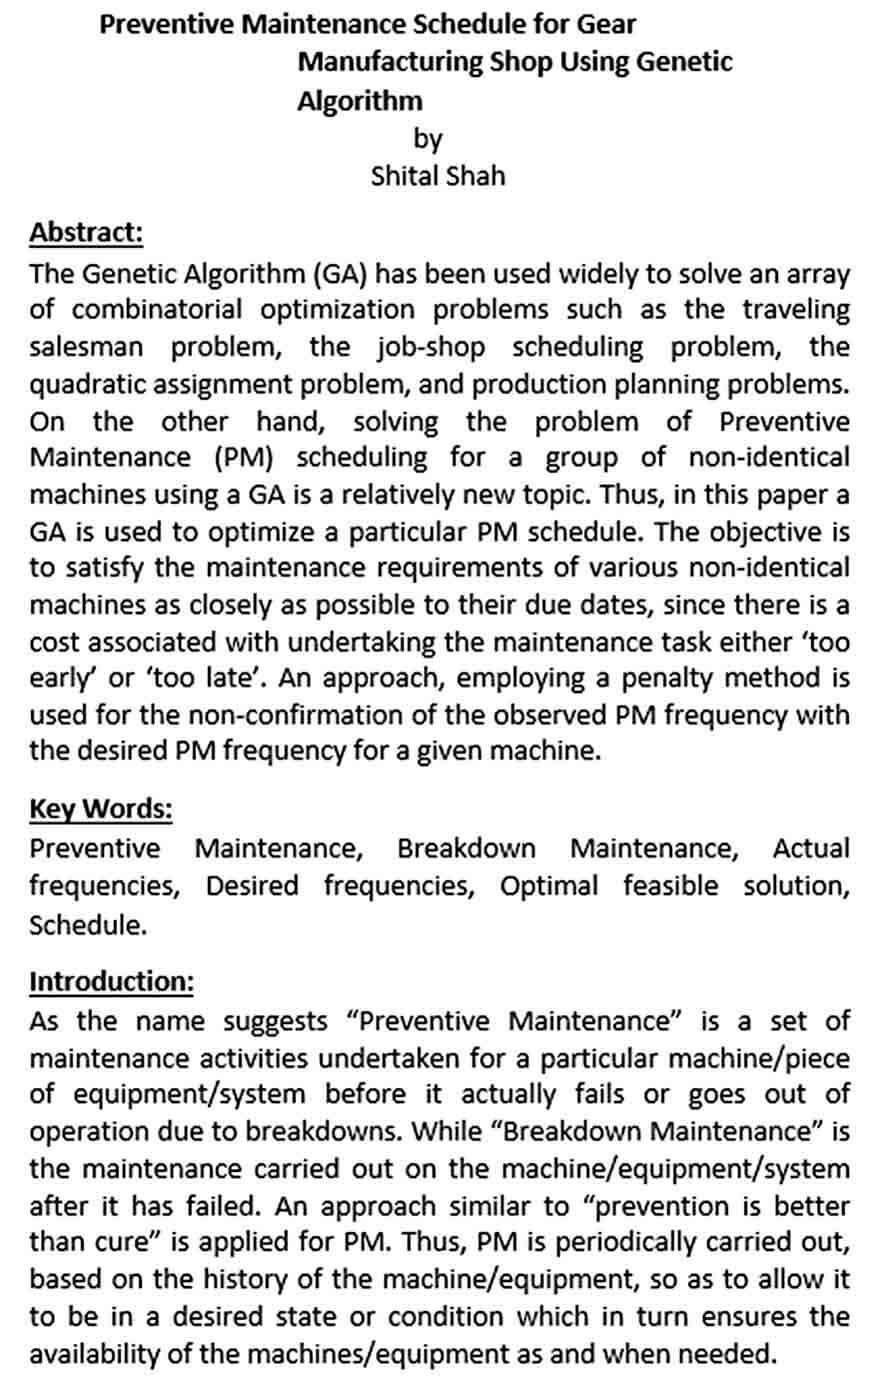 Preventive Maintenance Schedule for Gear Manufacturing Shop PDF